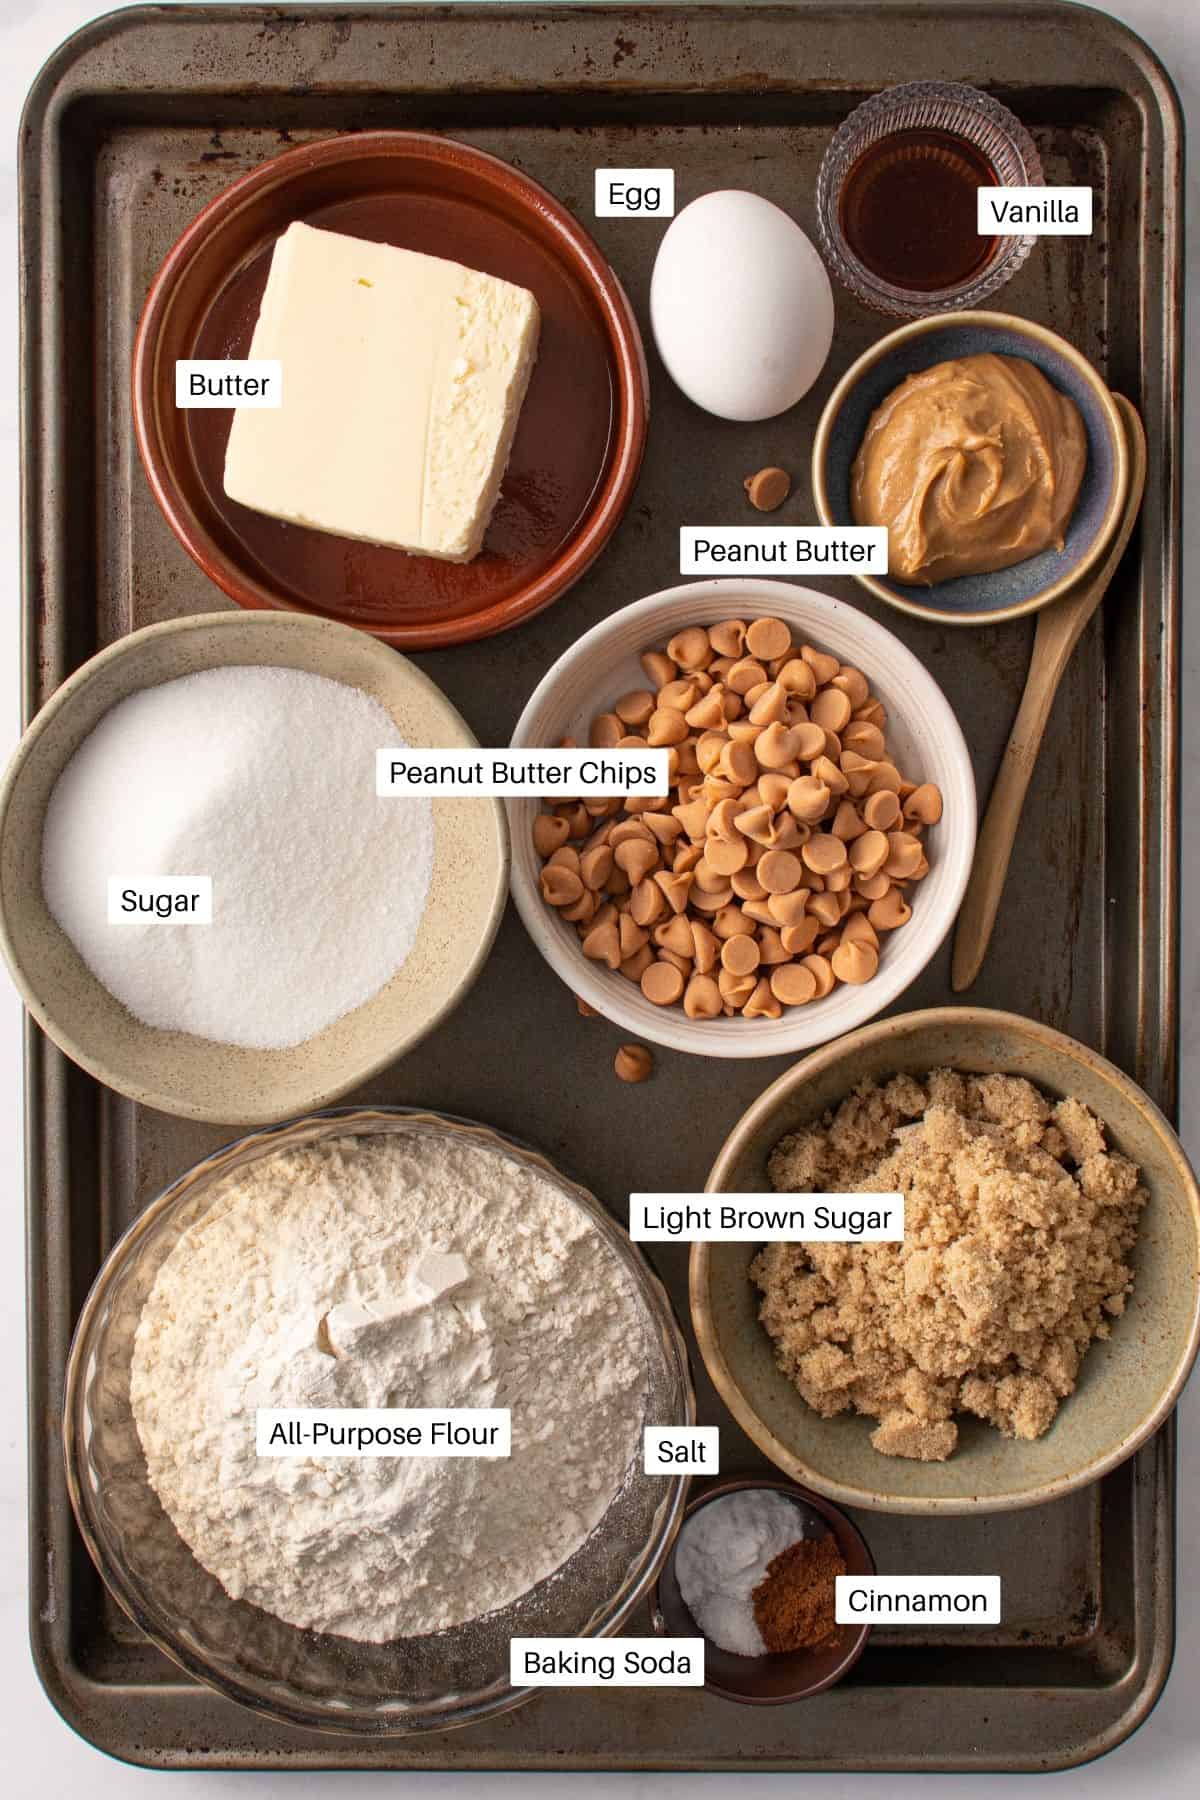 Butter, egg, vanilla, peanut butter, peanut butter chips, sugar, brown sugar, flour, salt, cinnamon and baking soda on a baking dish.